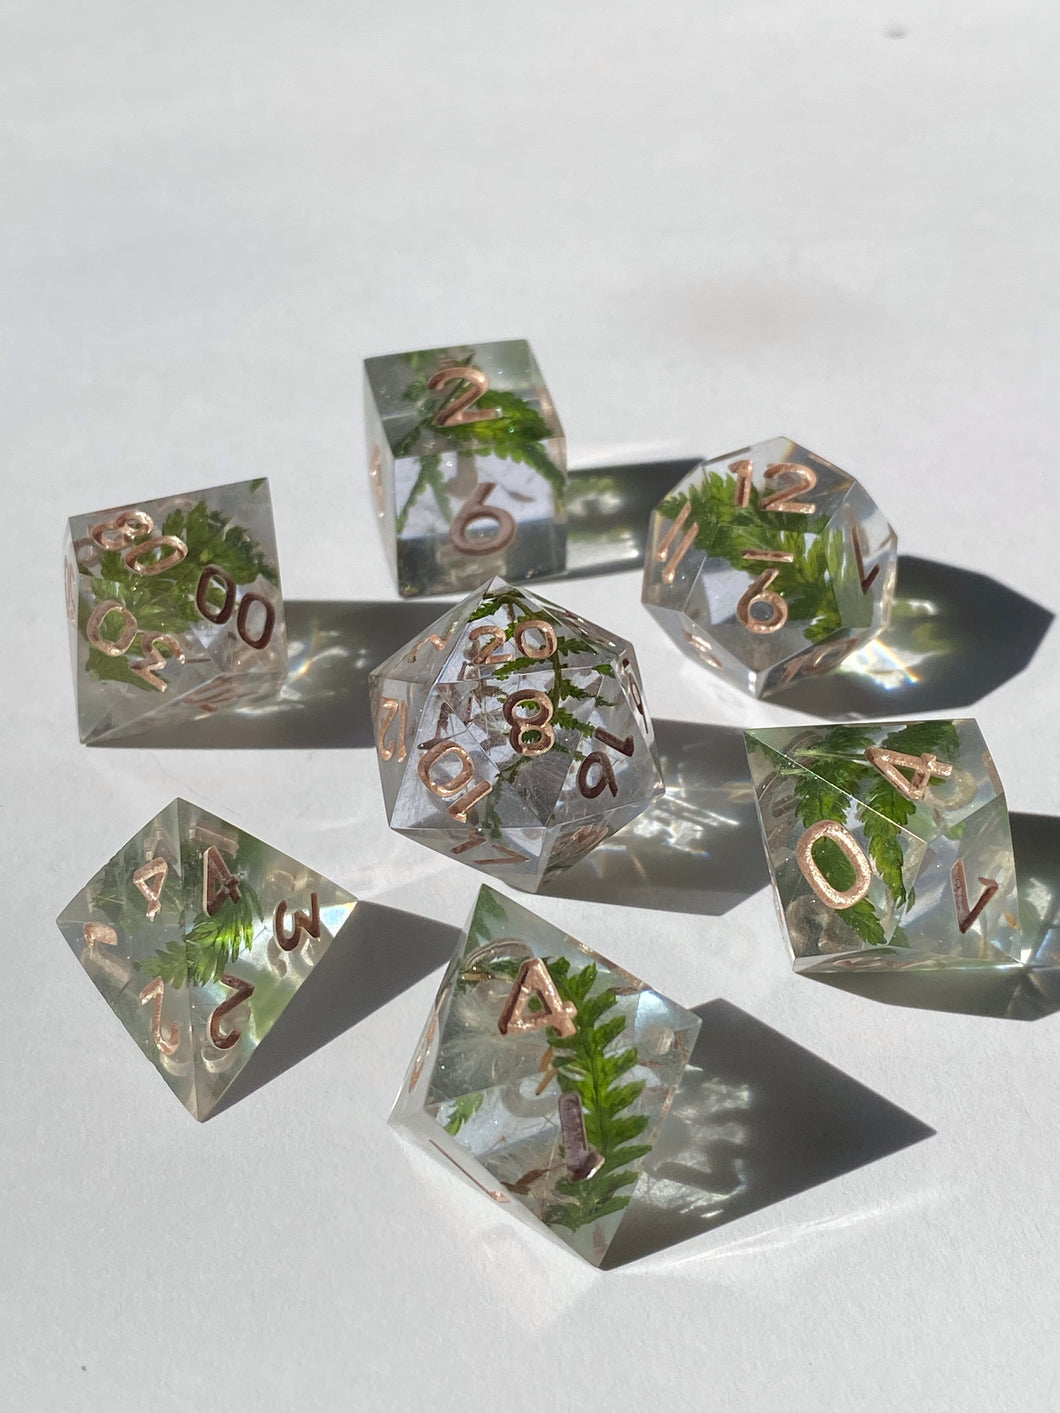 Forest Gems - periwinkle 7-Piece Dice Set